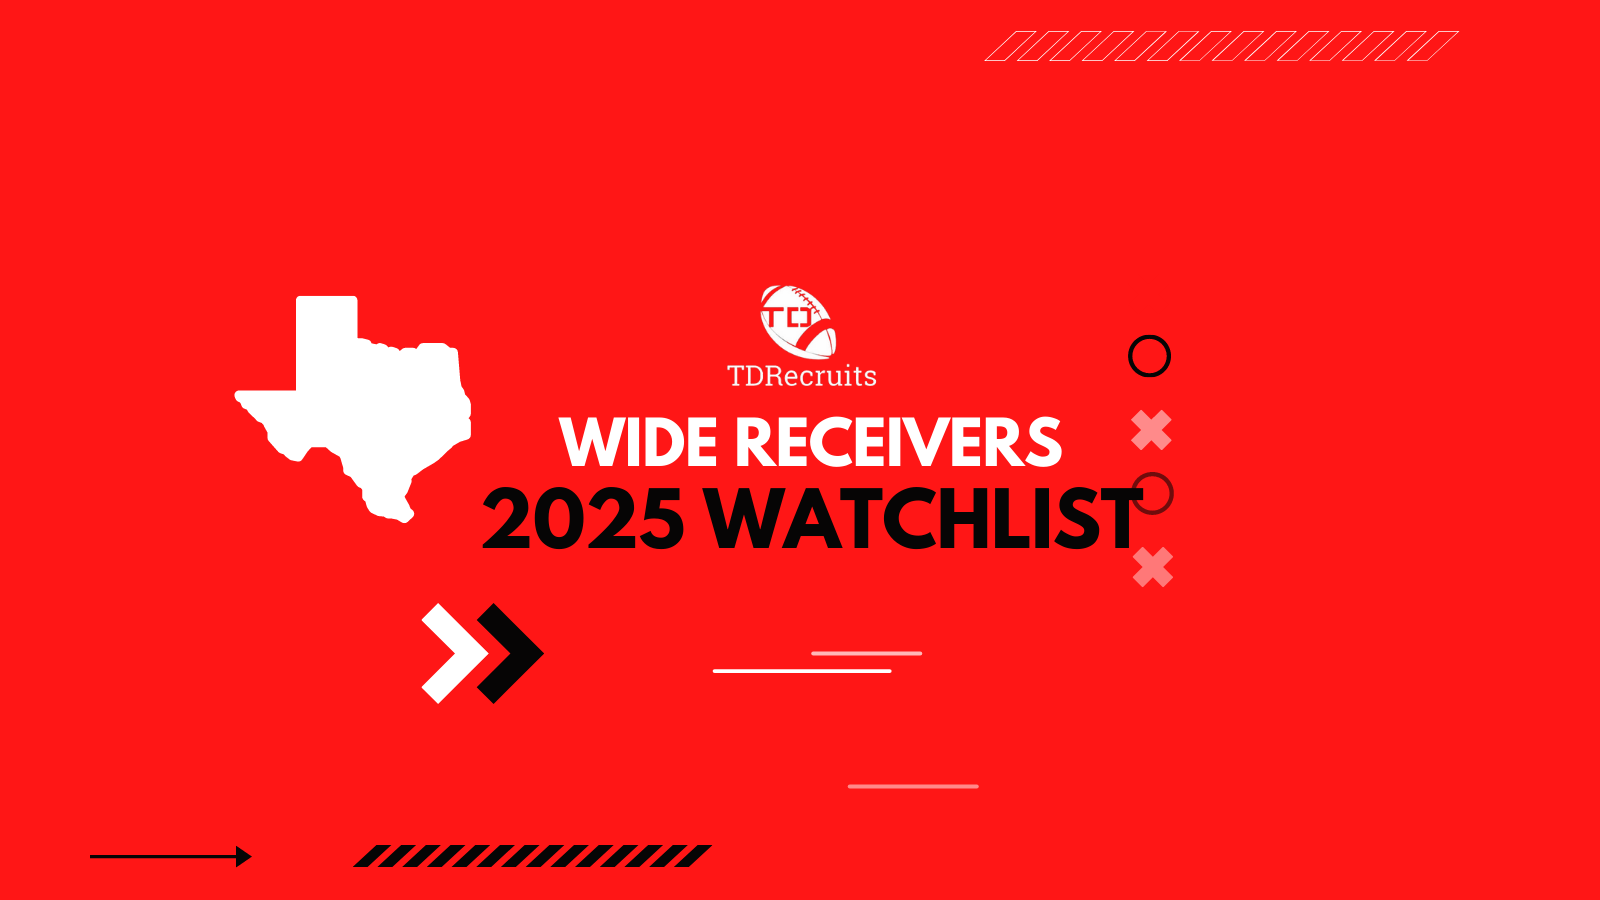 HS Preseason Preview 2025 Top WR Watchlist tdrecruits